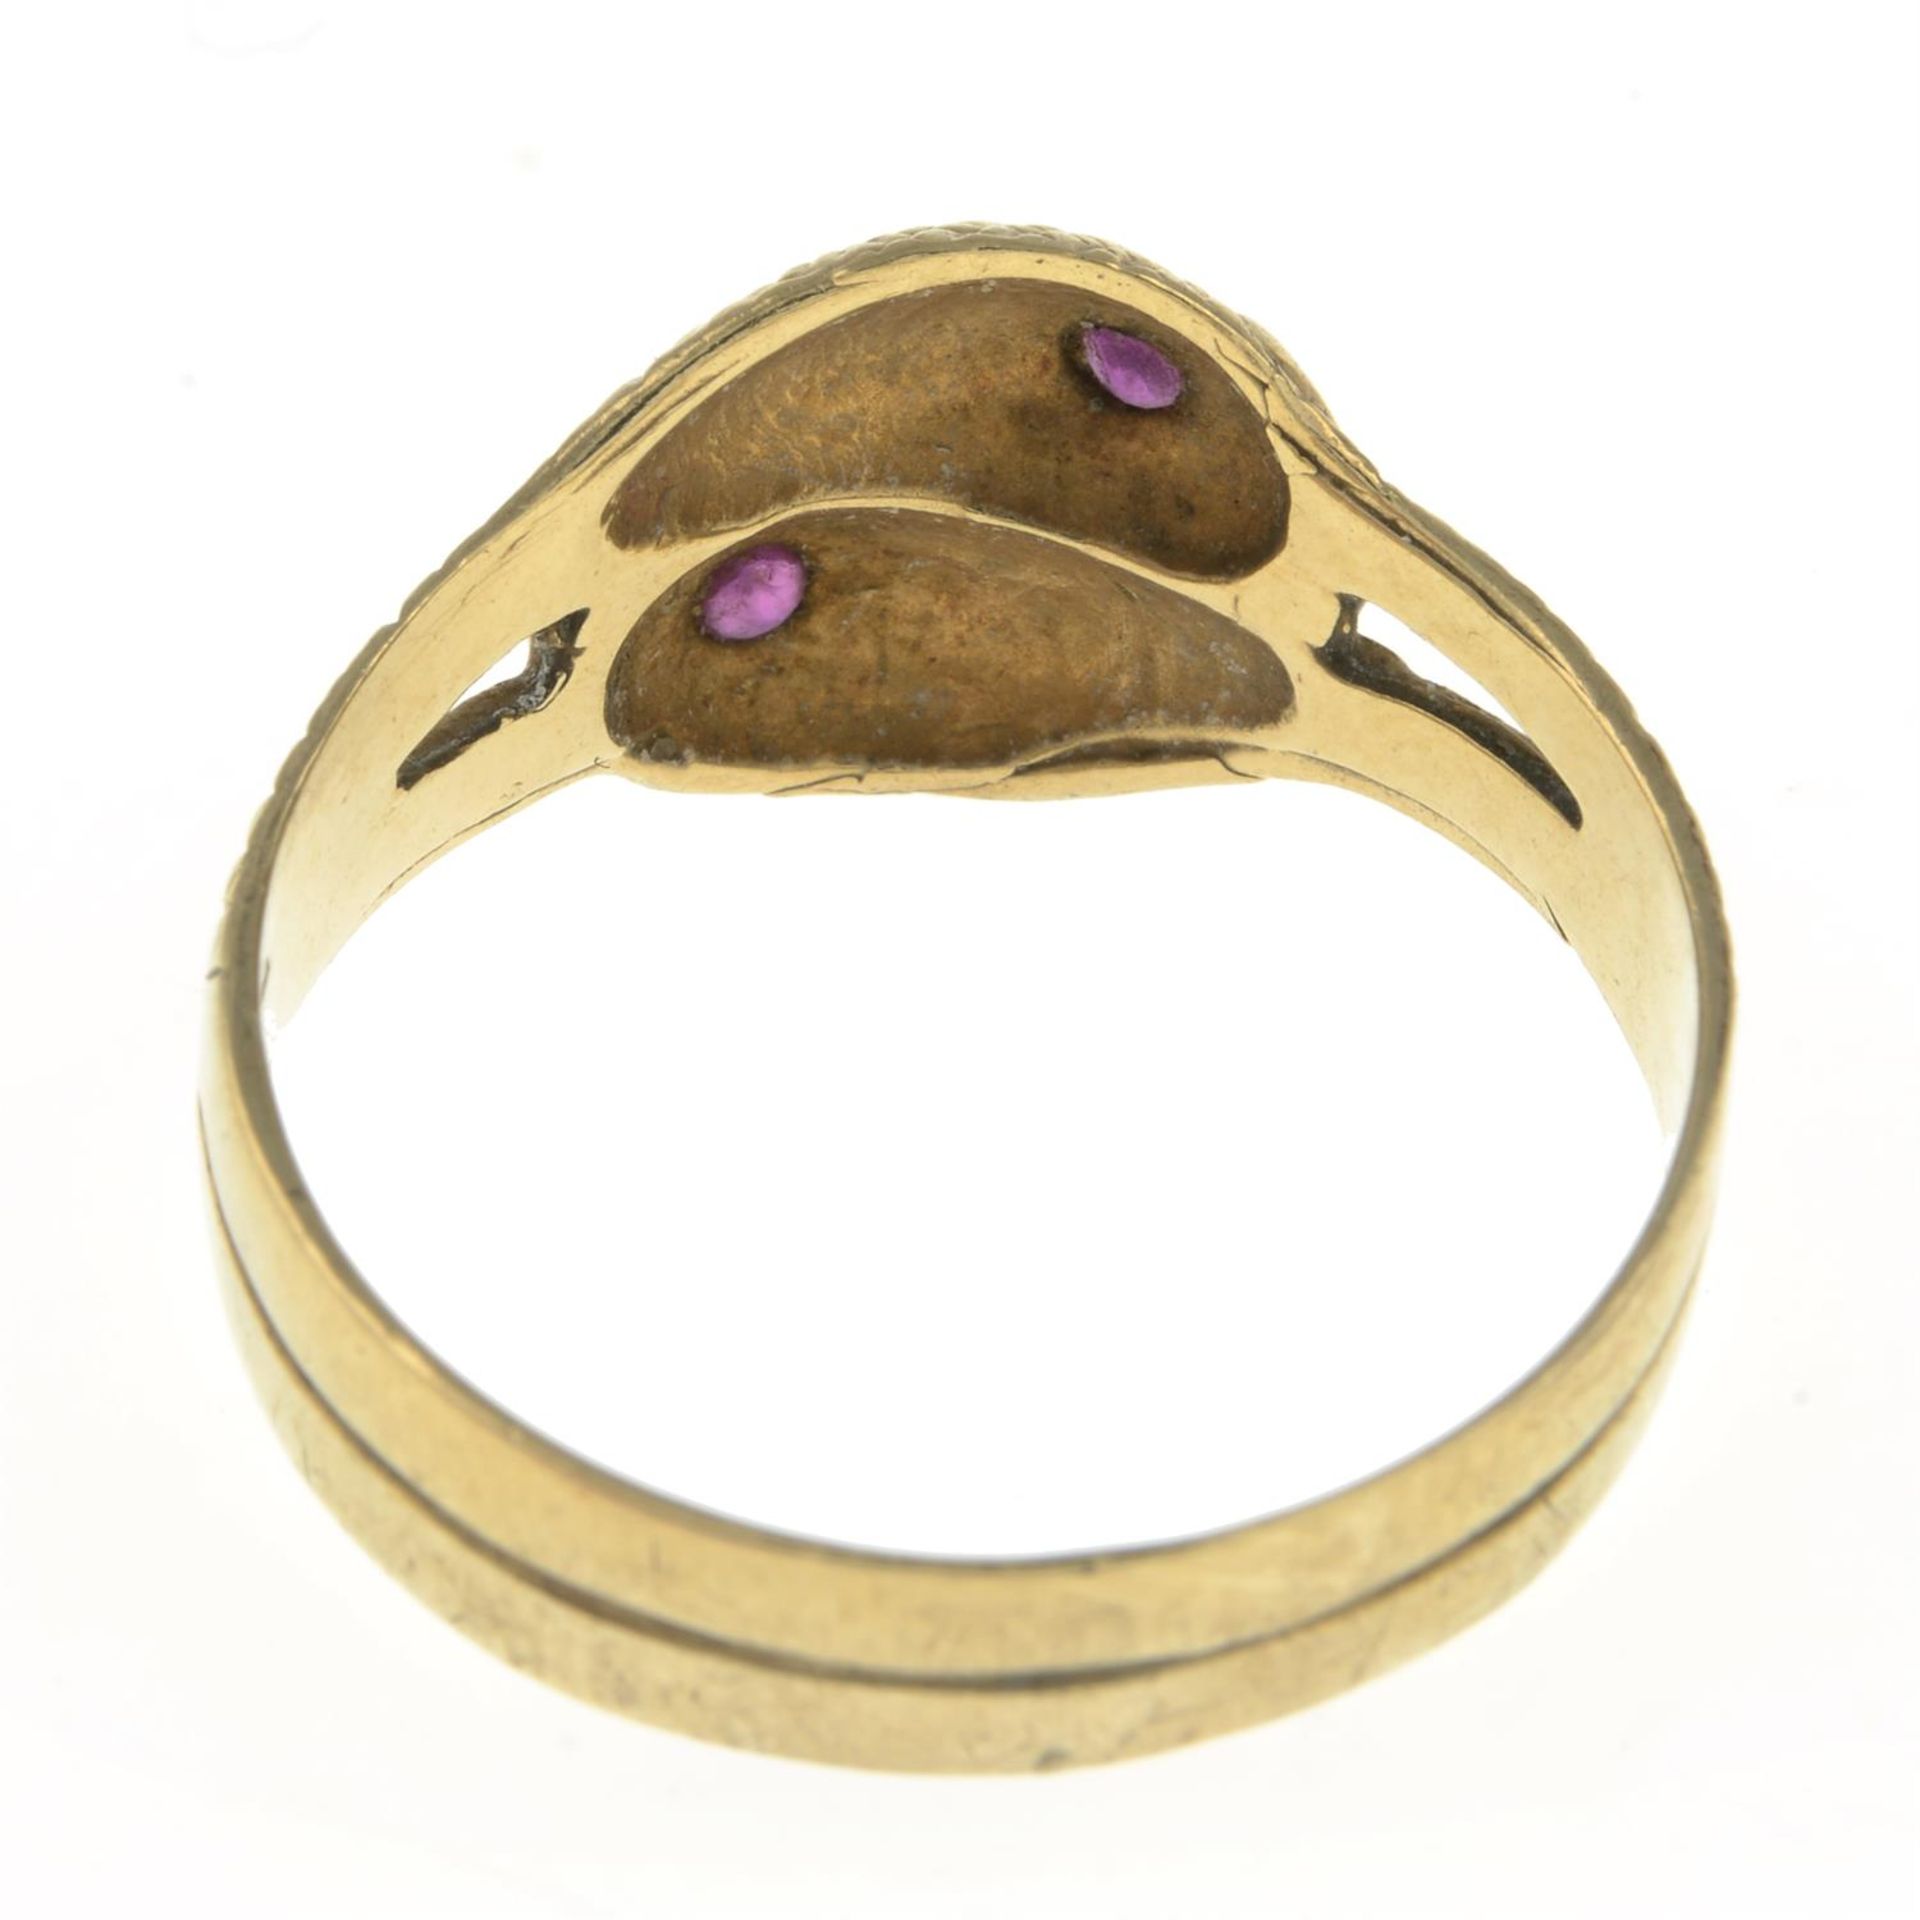 9ct gold snake dress ring - Image 2 of 2